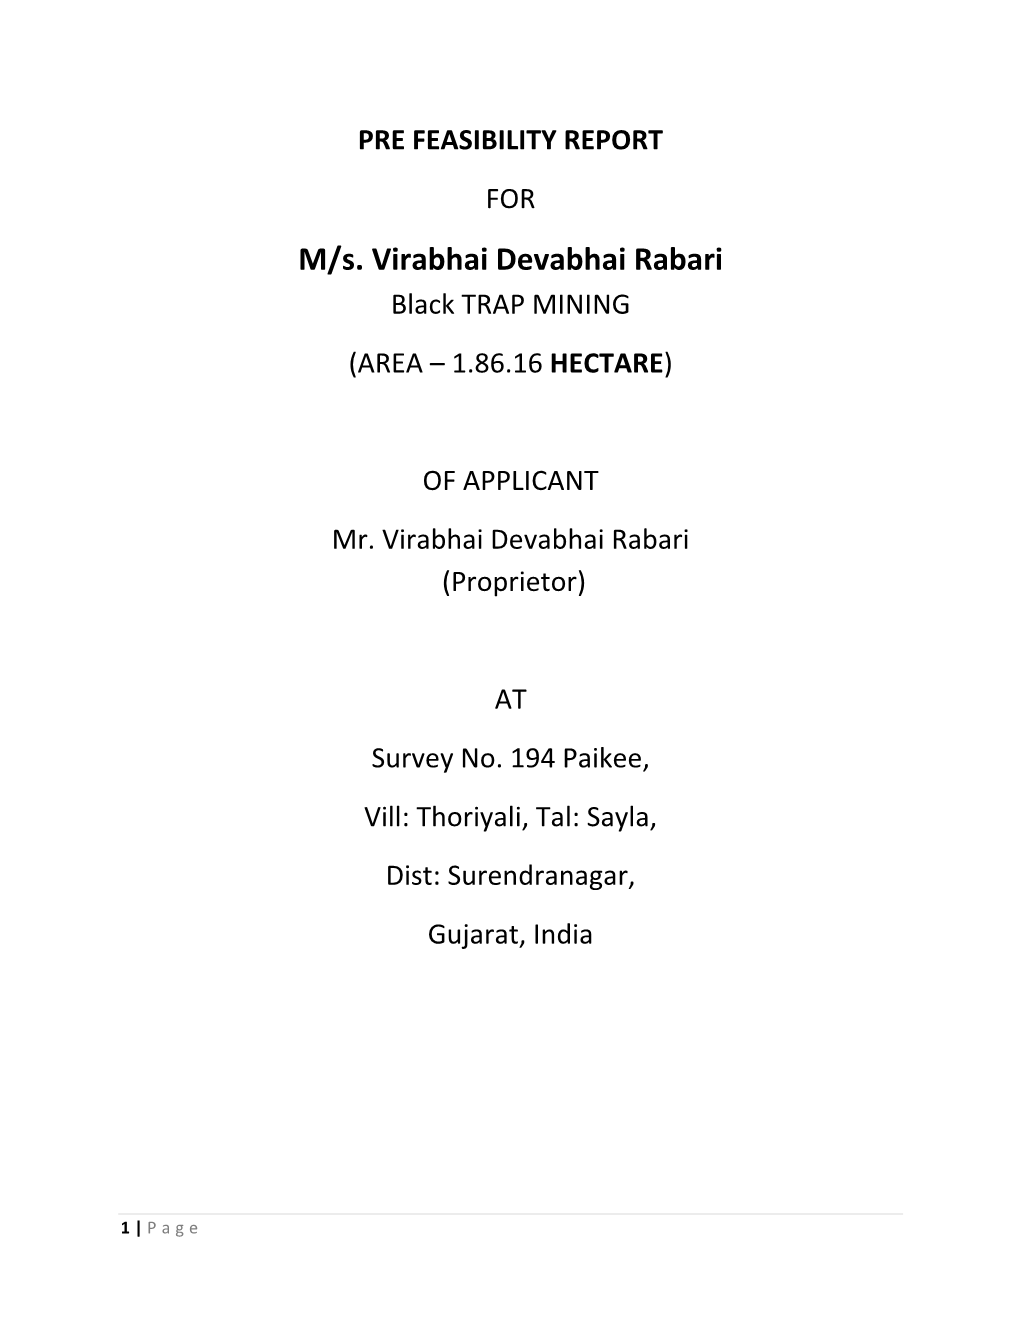 M/S. Virabhai Devabhai Rabari Black TRAP MINING (AREA – 1.86.16 HECTARE)